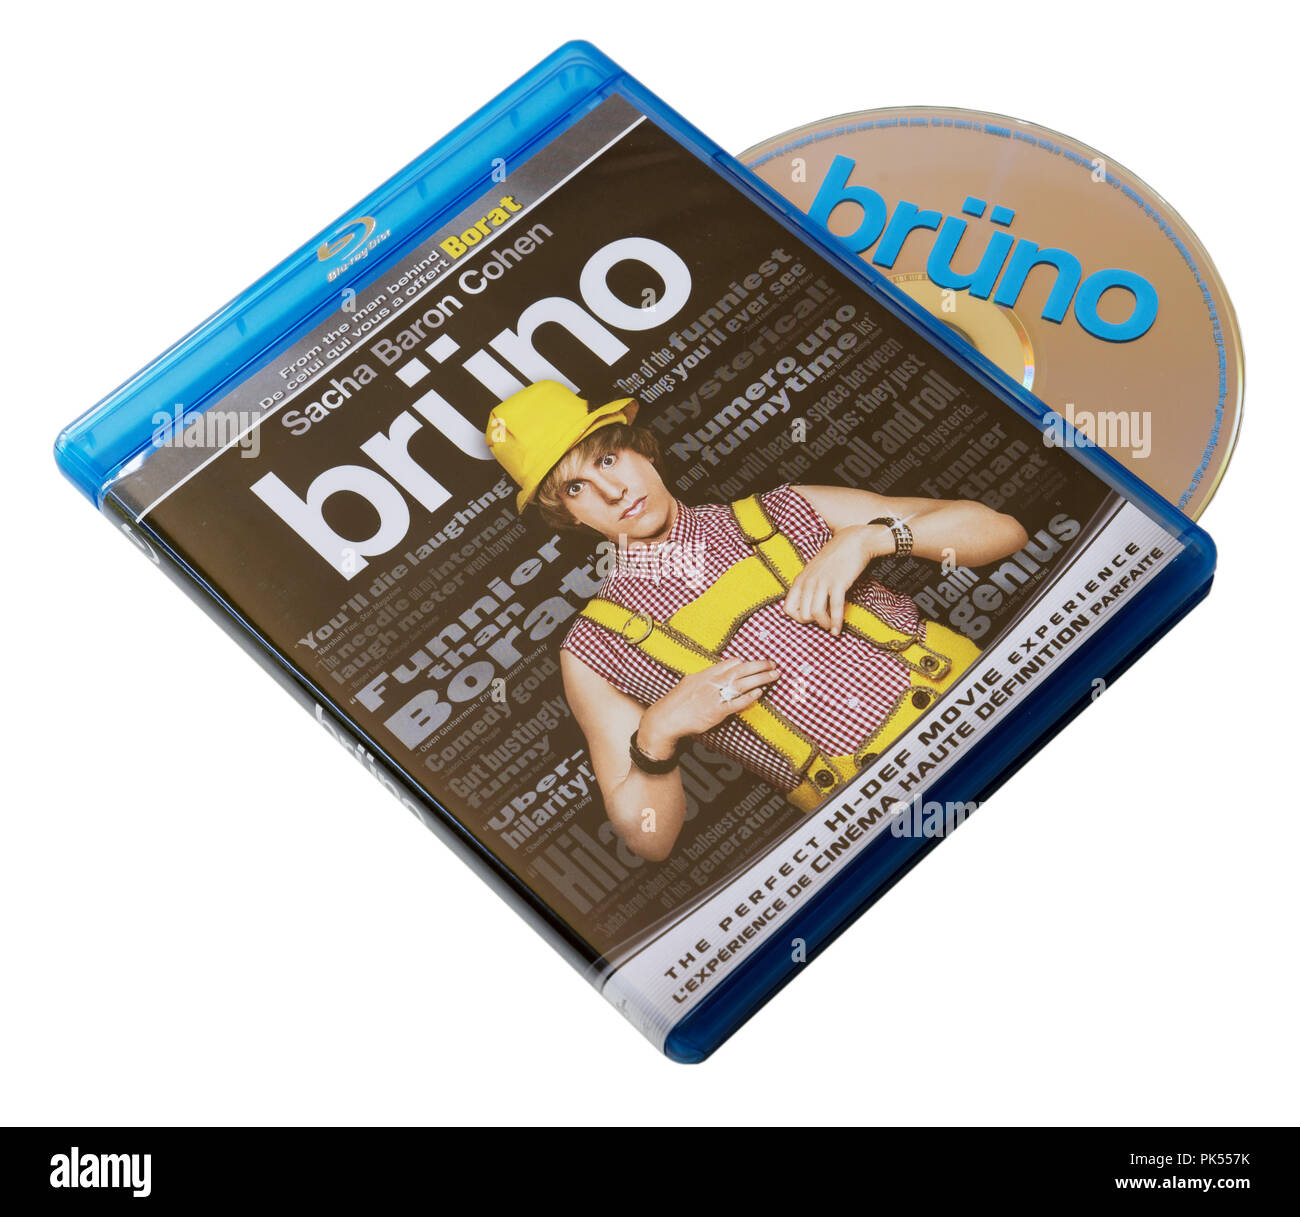 Bruno DVD film by Sacha Baron Cohen Stock Photo